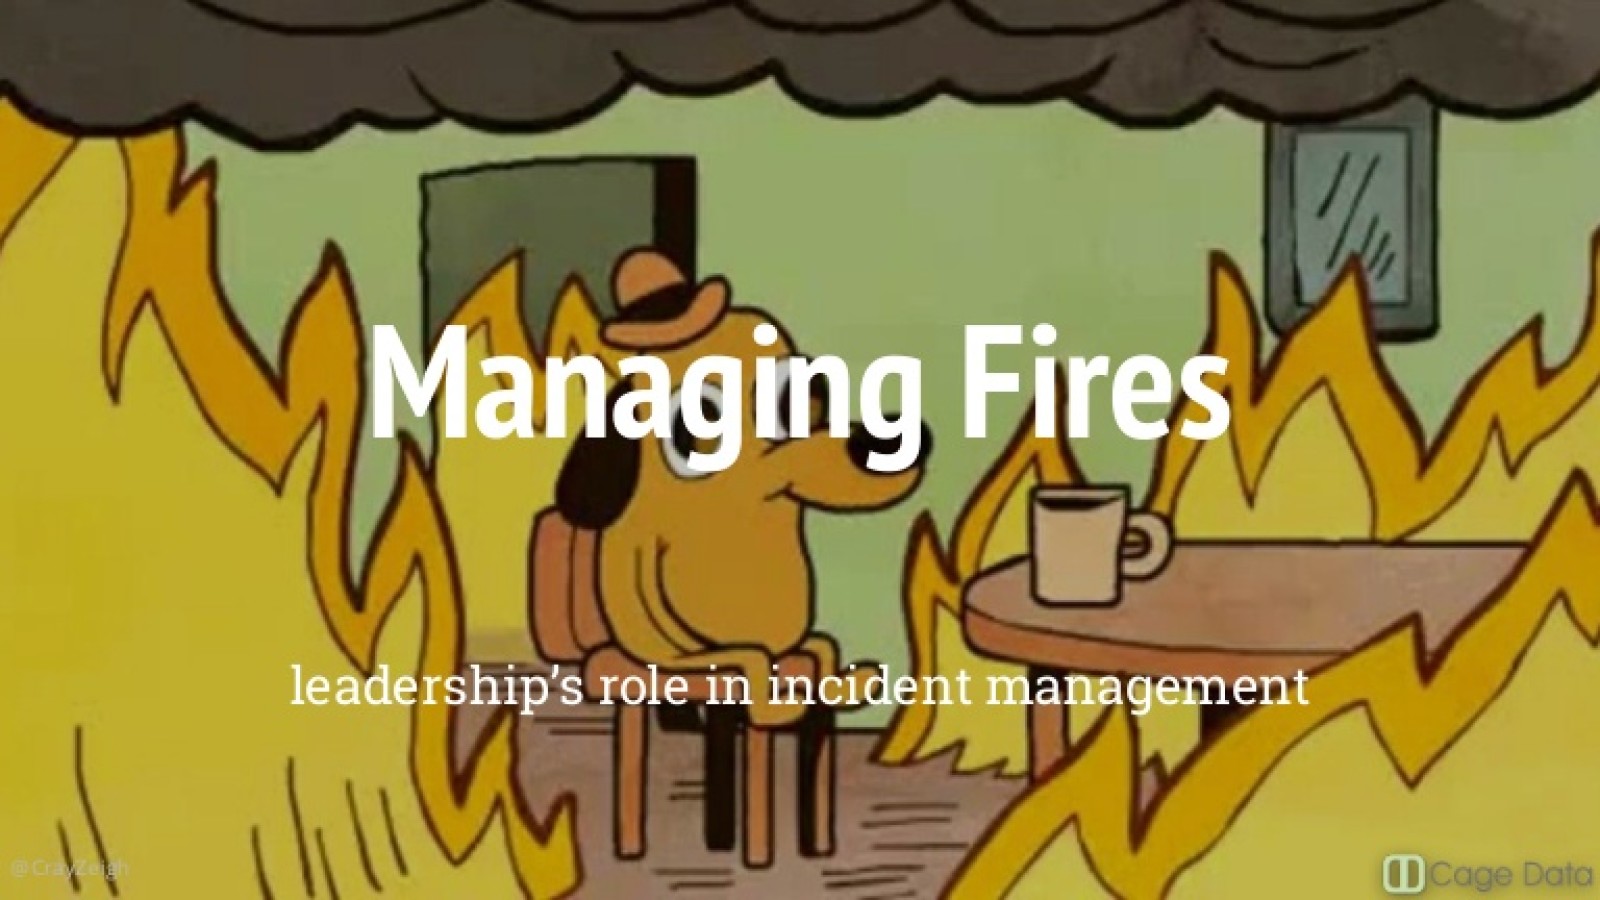 Managing Fires: Leadership through Crisis